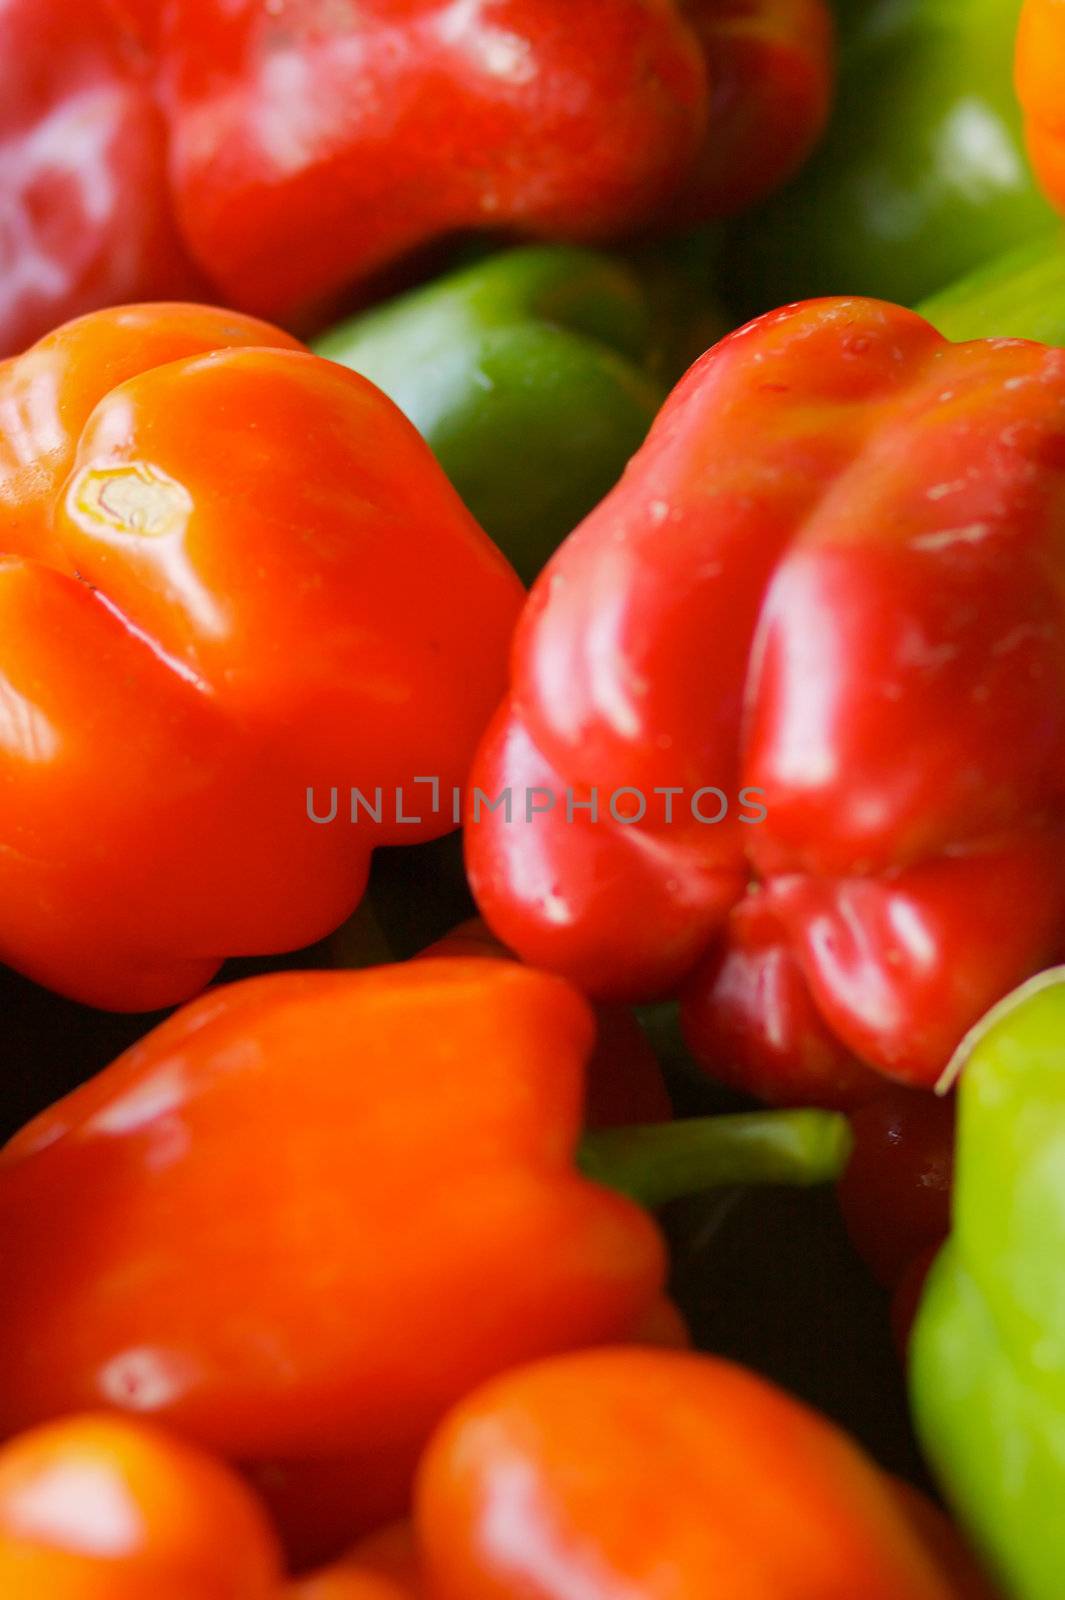 orange red green peppers by bobkeenan